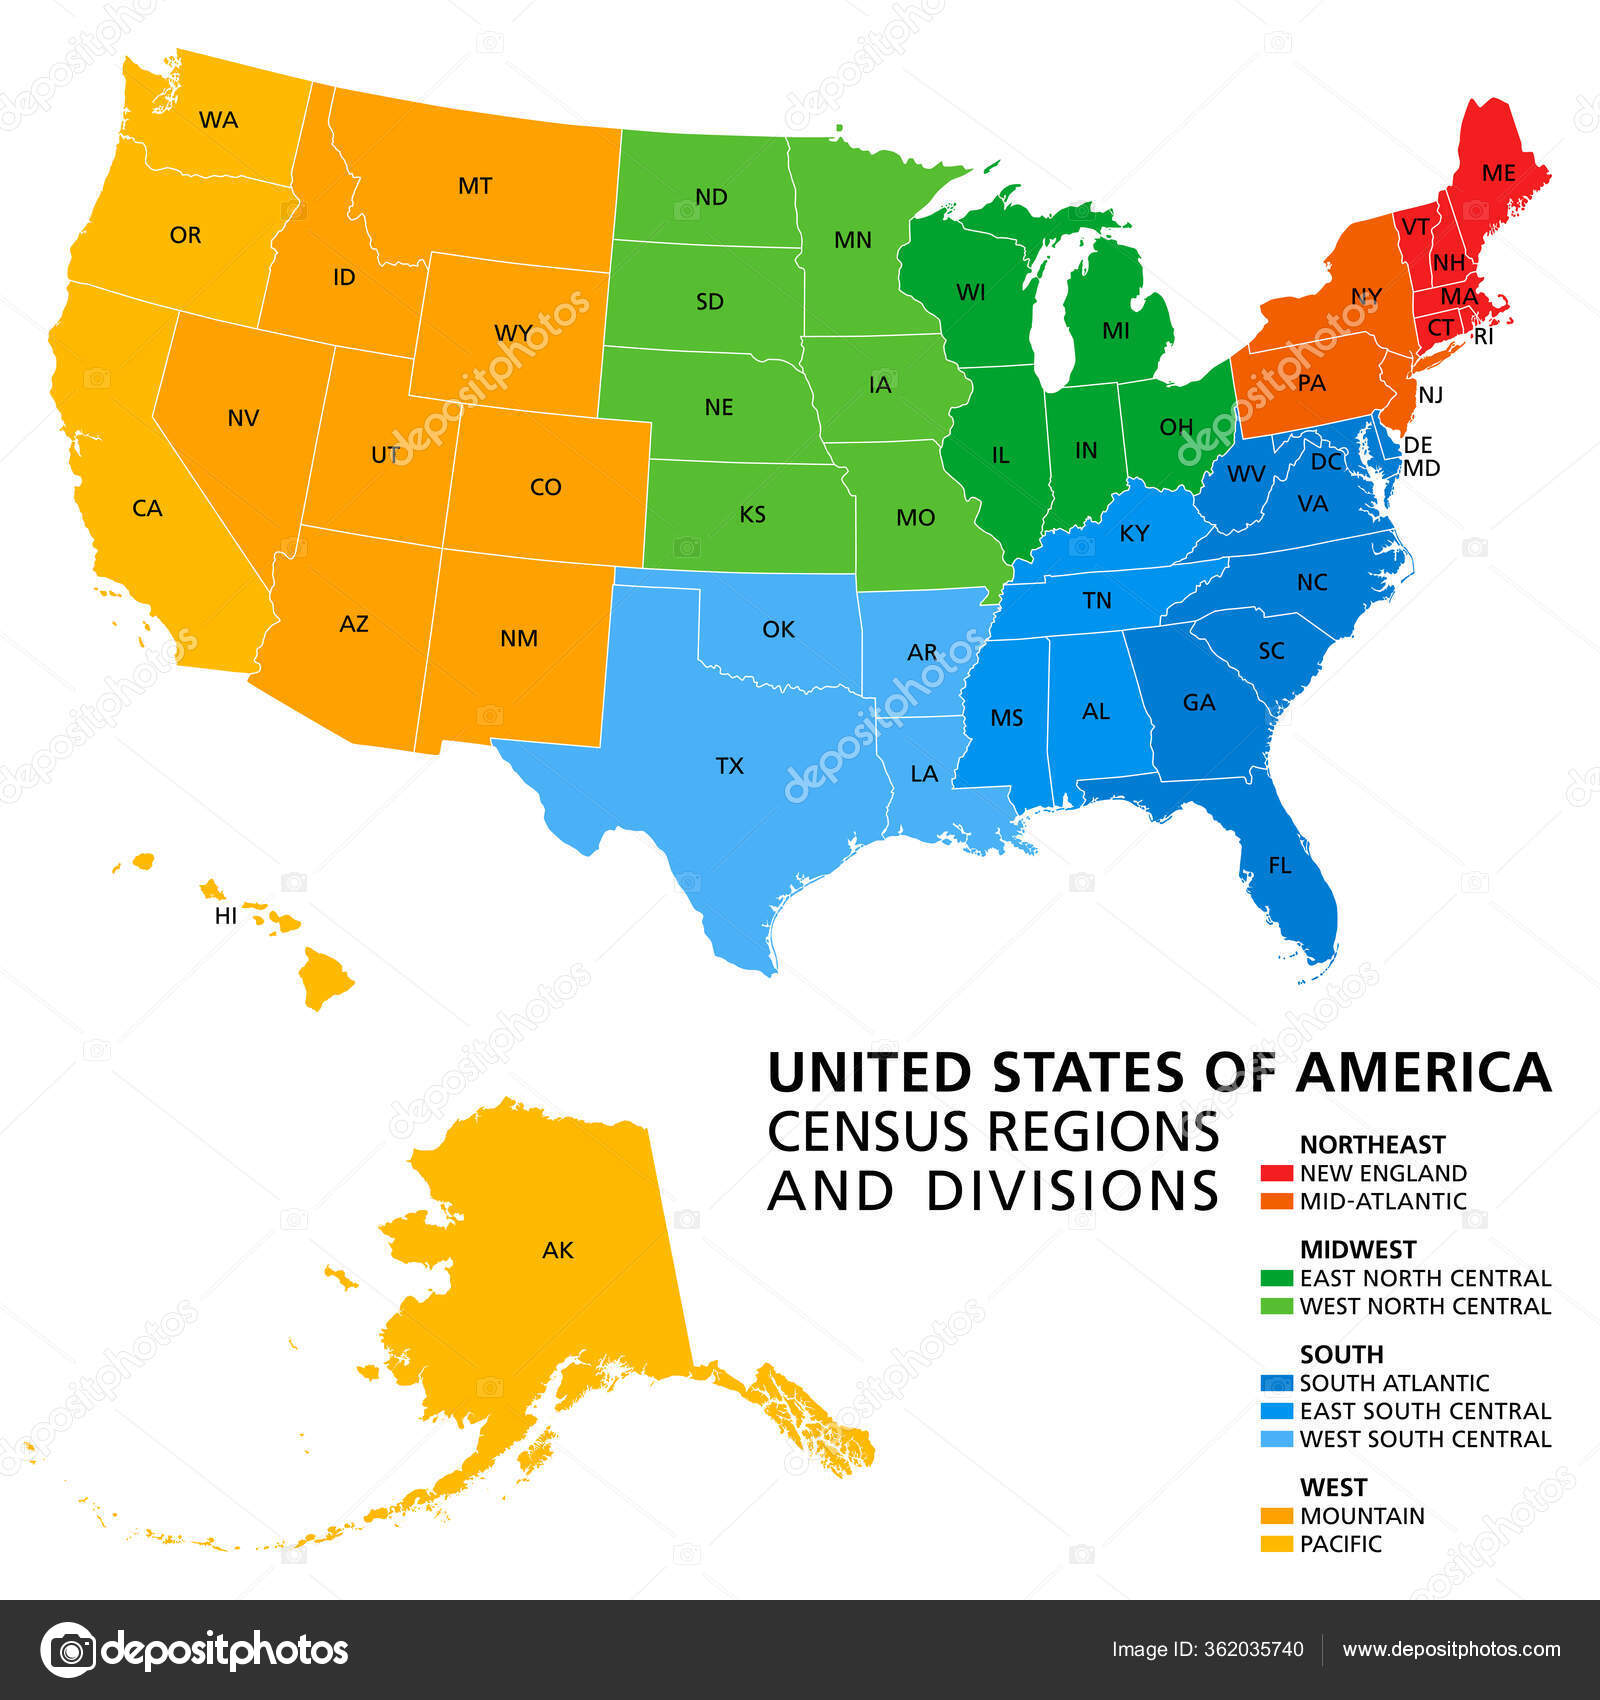 https://st3.depositphotos.com/2465573/36203/v/1600/depositphotos_362035740-stock-illustration-united-states-census-regions-divisions.jpg